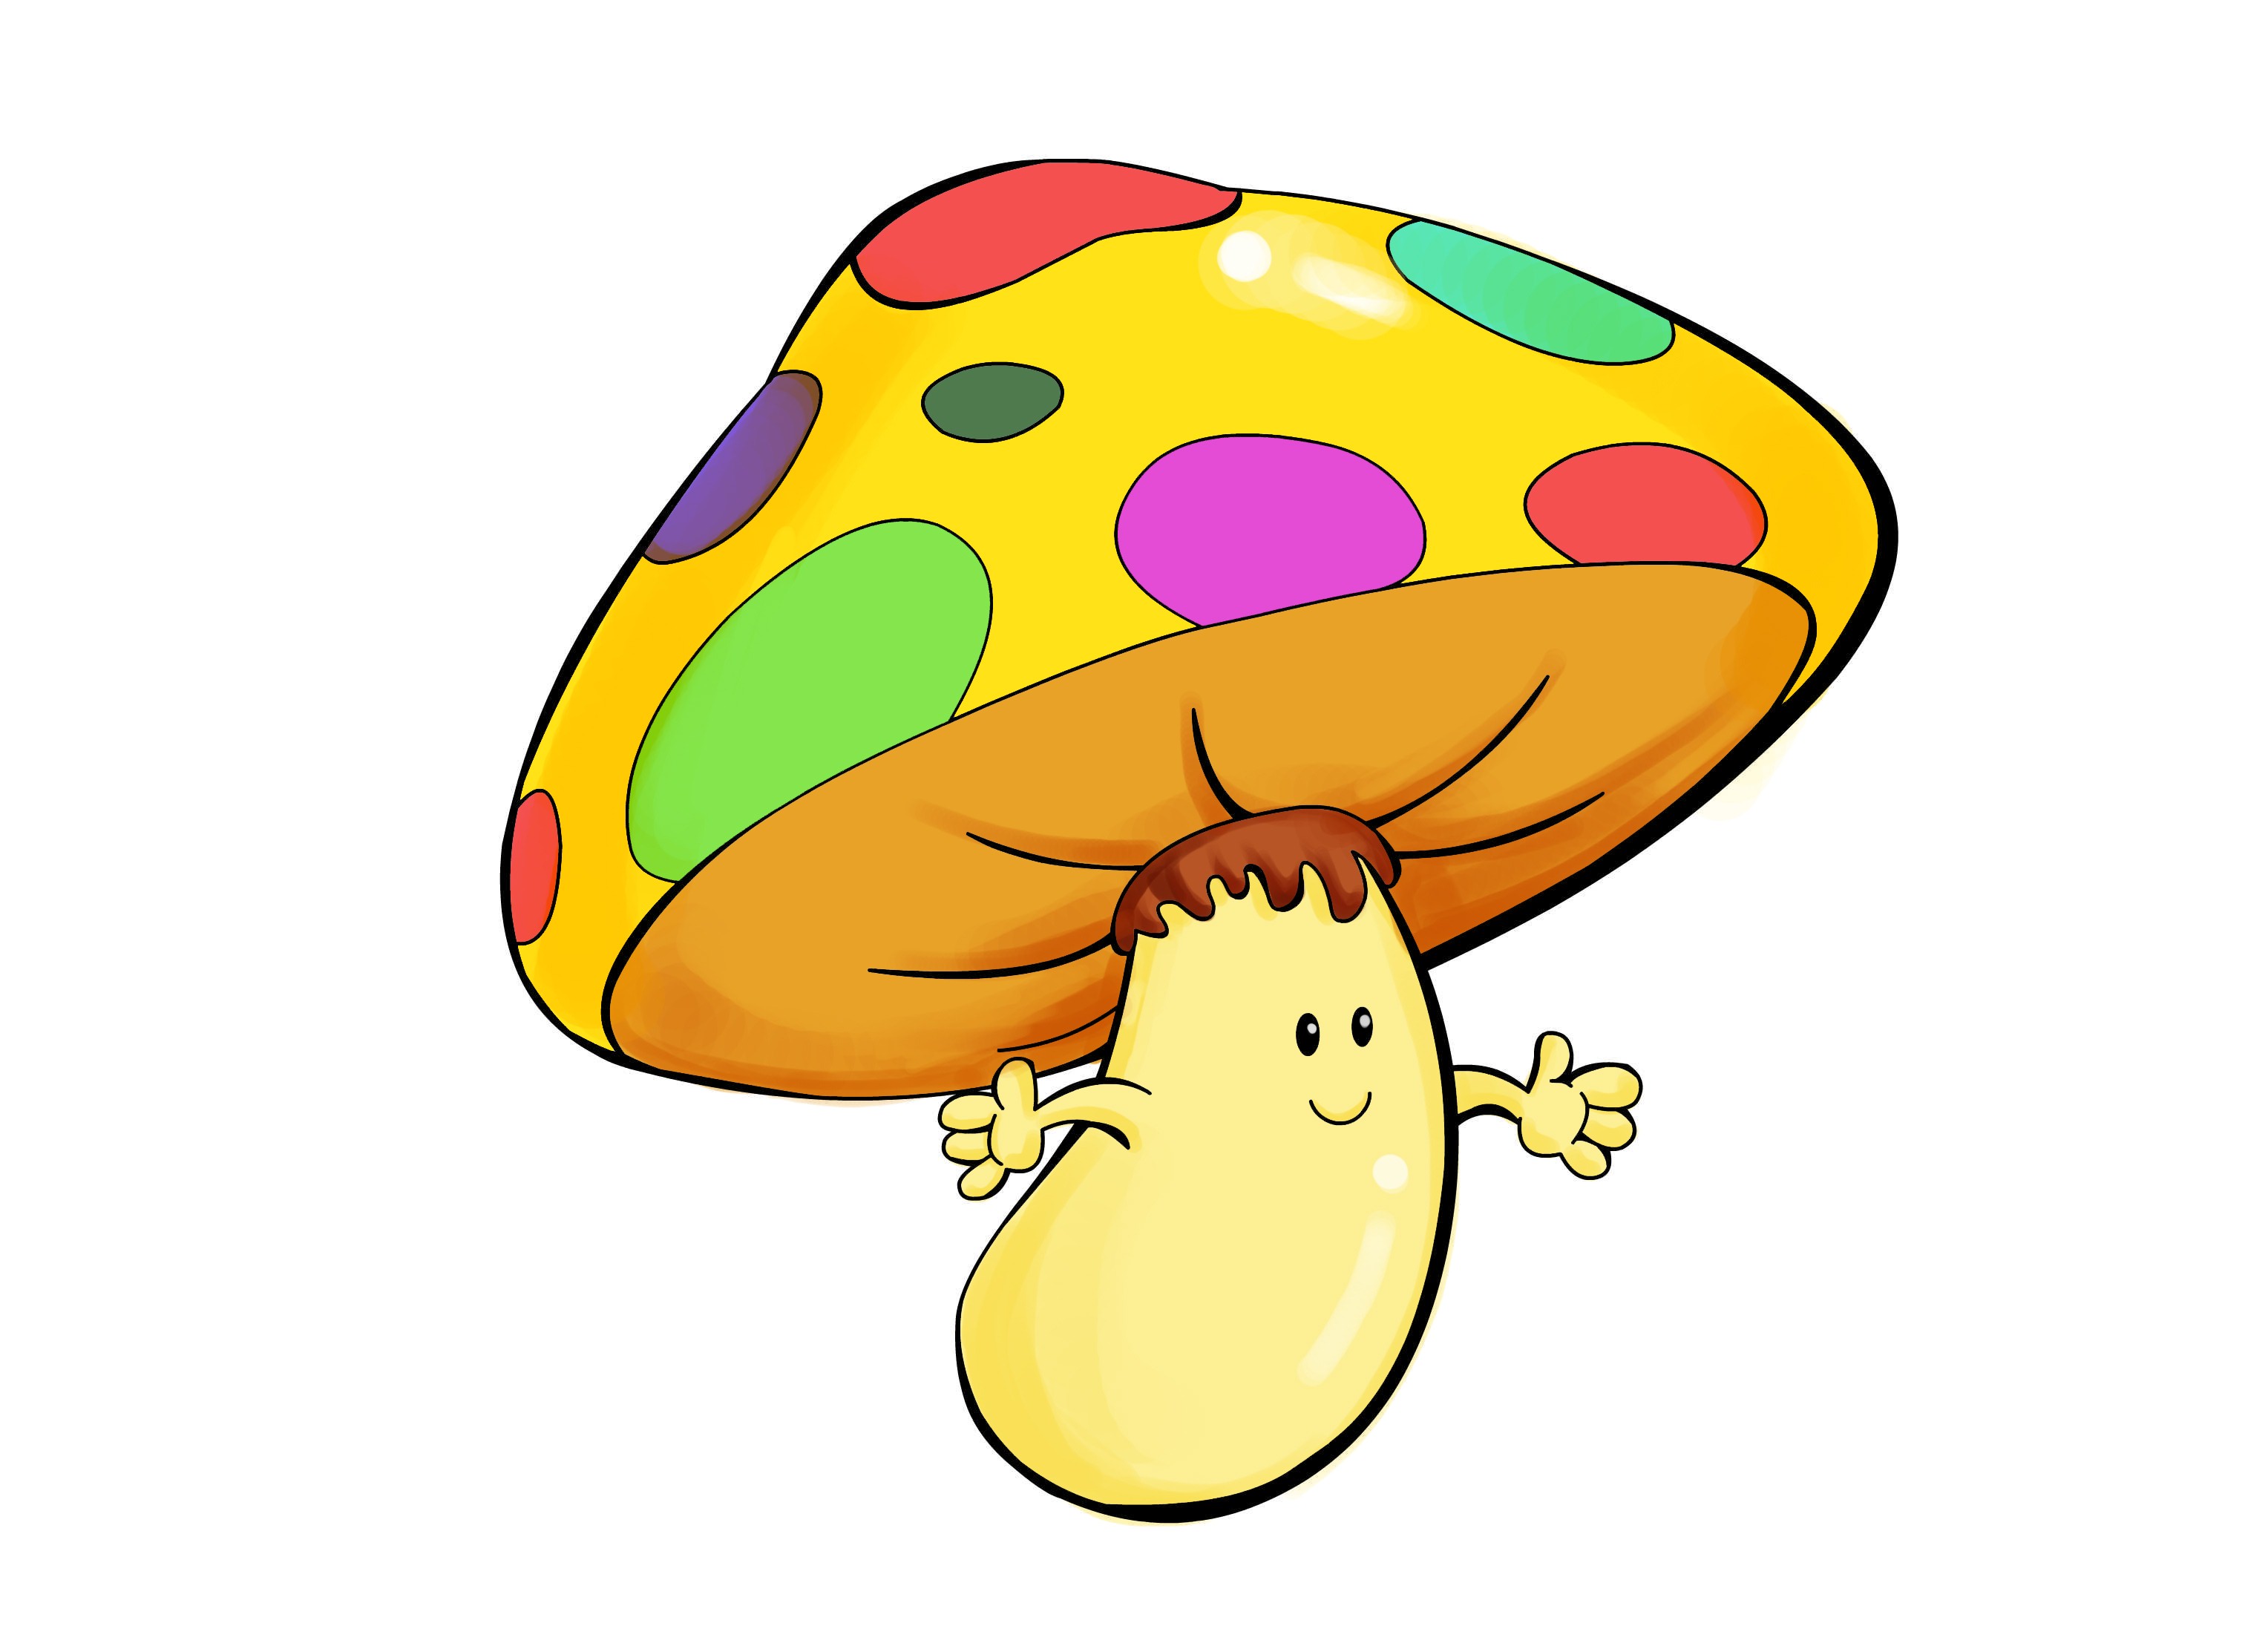 Mushroom Cartoon - ClipArt Best